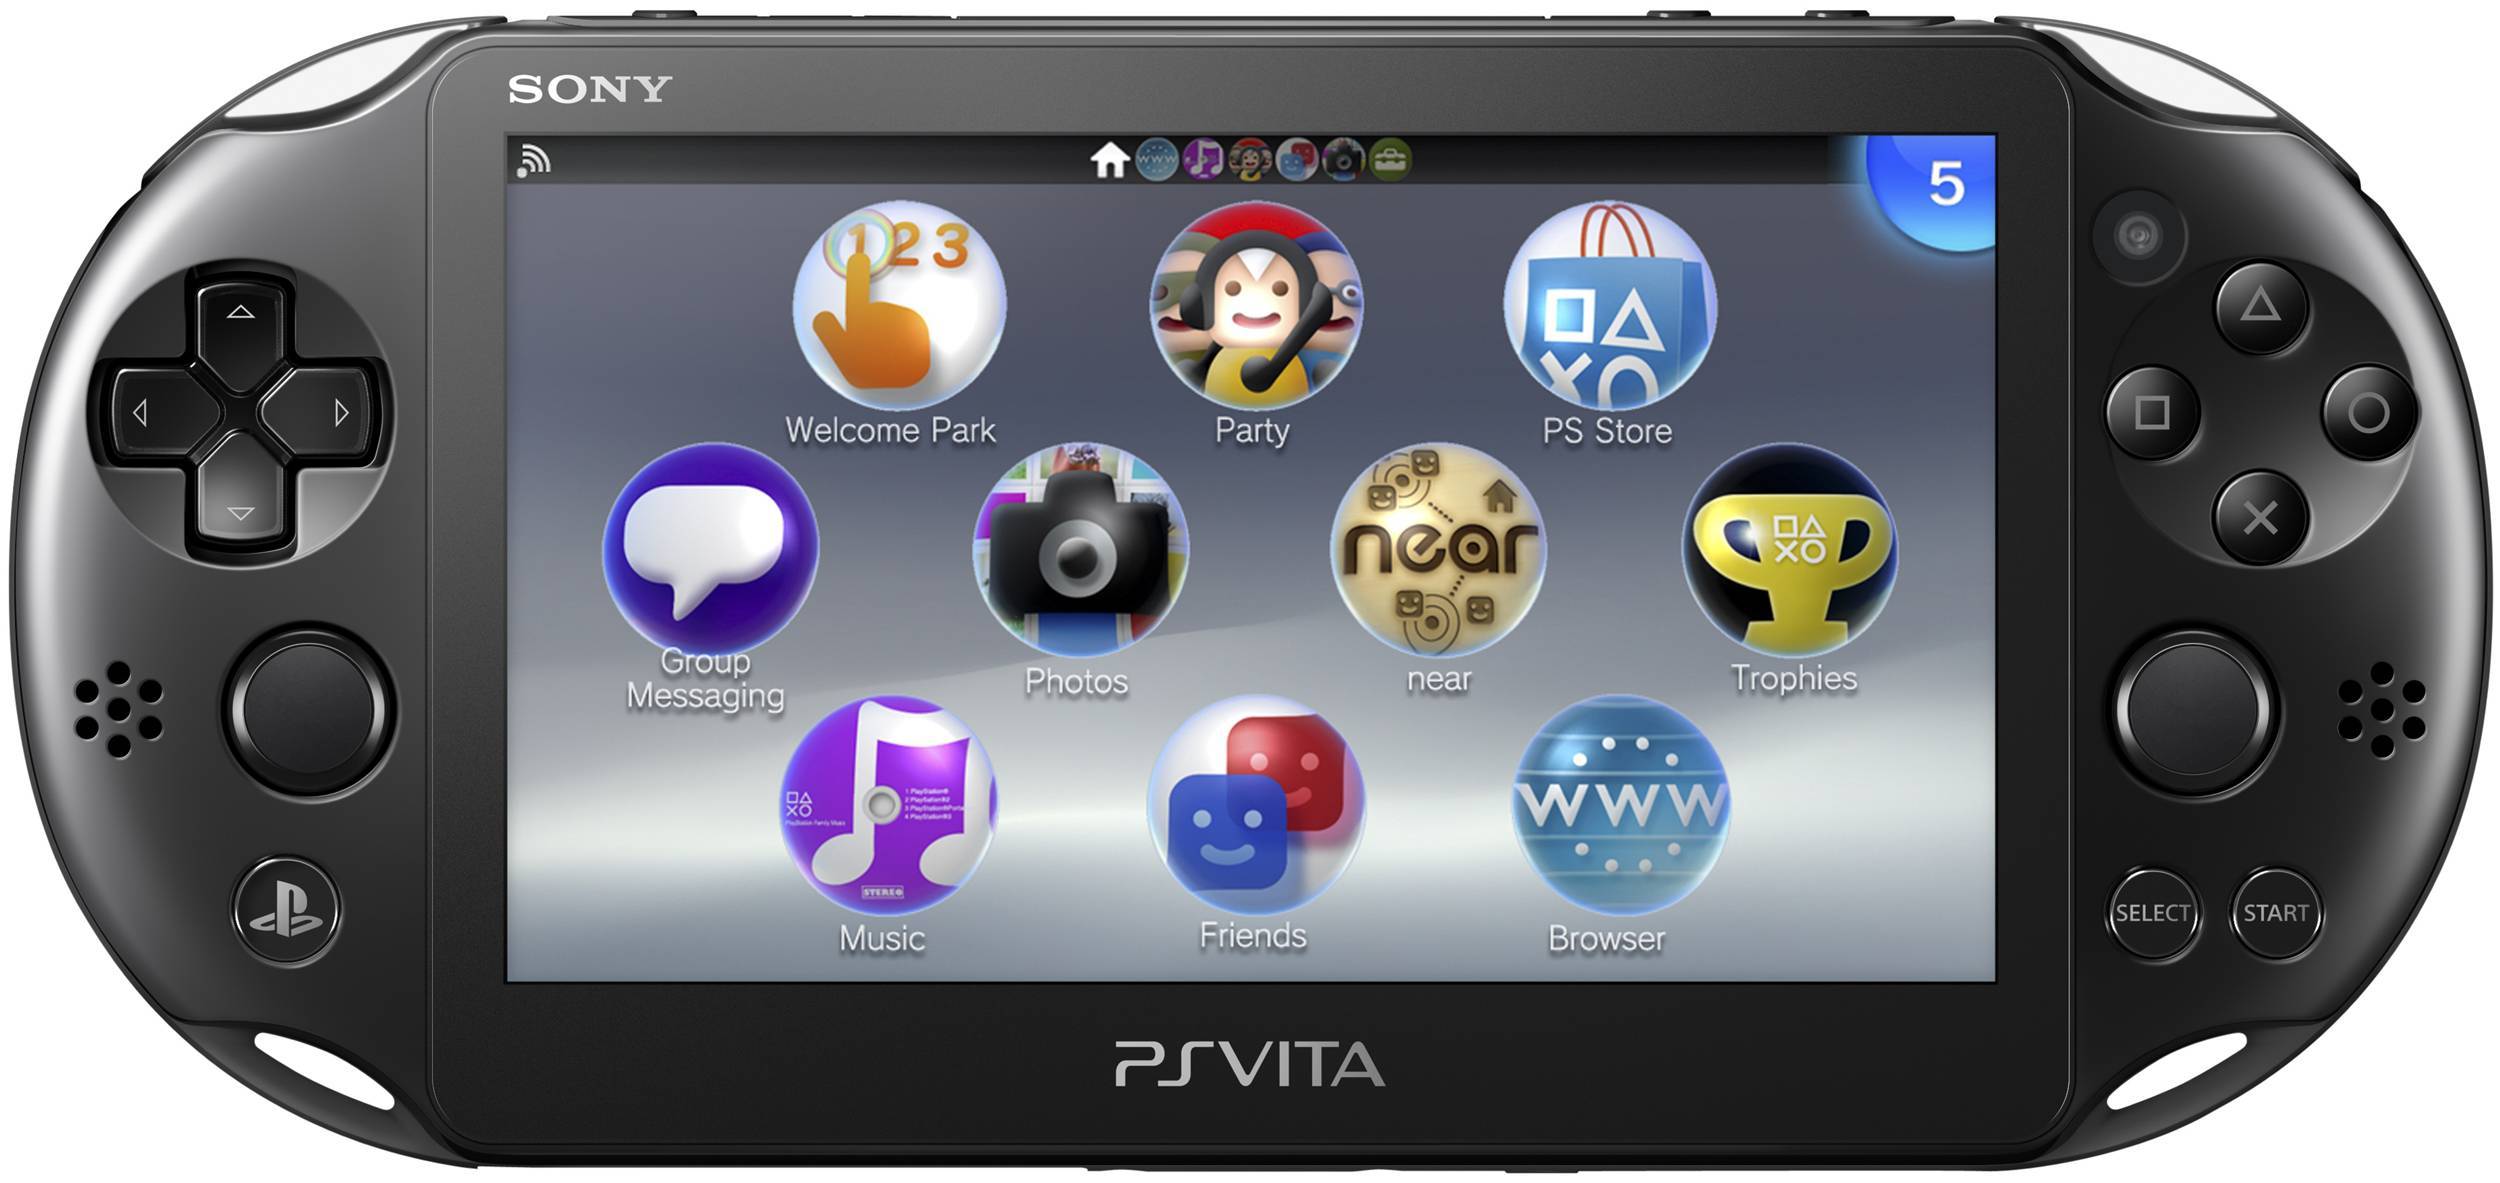 Игровая приставка найти. Sony PLAYSTATION Vita 2000. Игровая приставка Sony PLAYSTATION Vita 2000. Игровая приставка Sony PLAYSTATION Vita 3g/Wi-Fi. Sony PS Vita Slim.